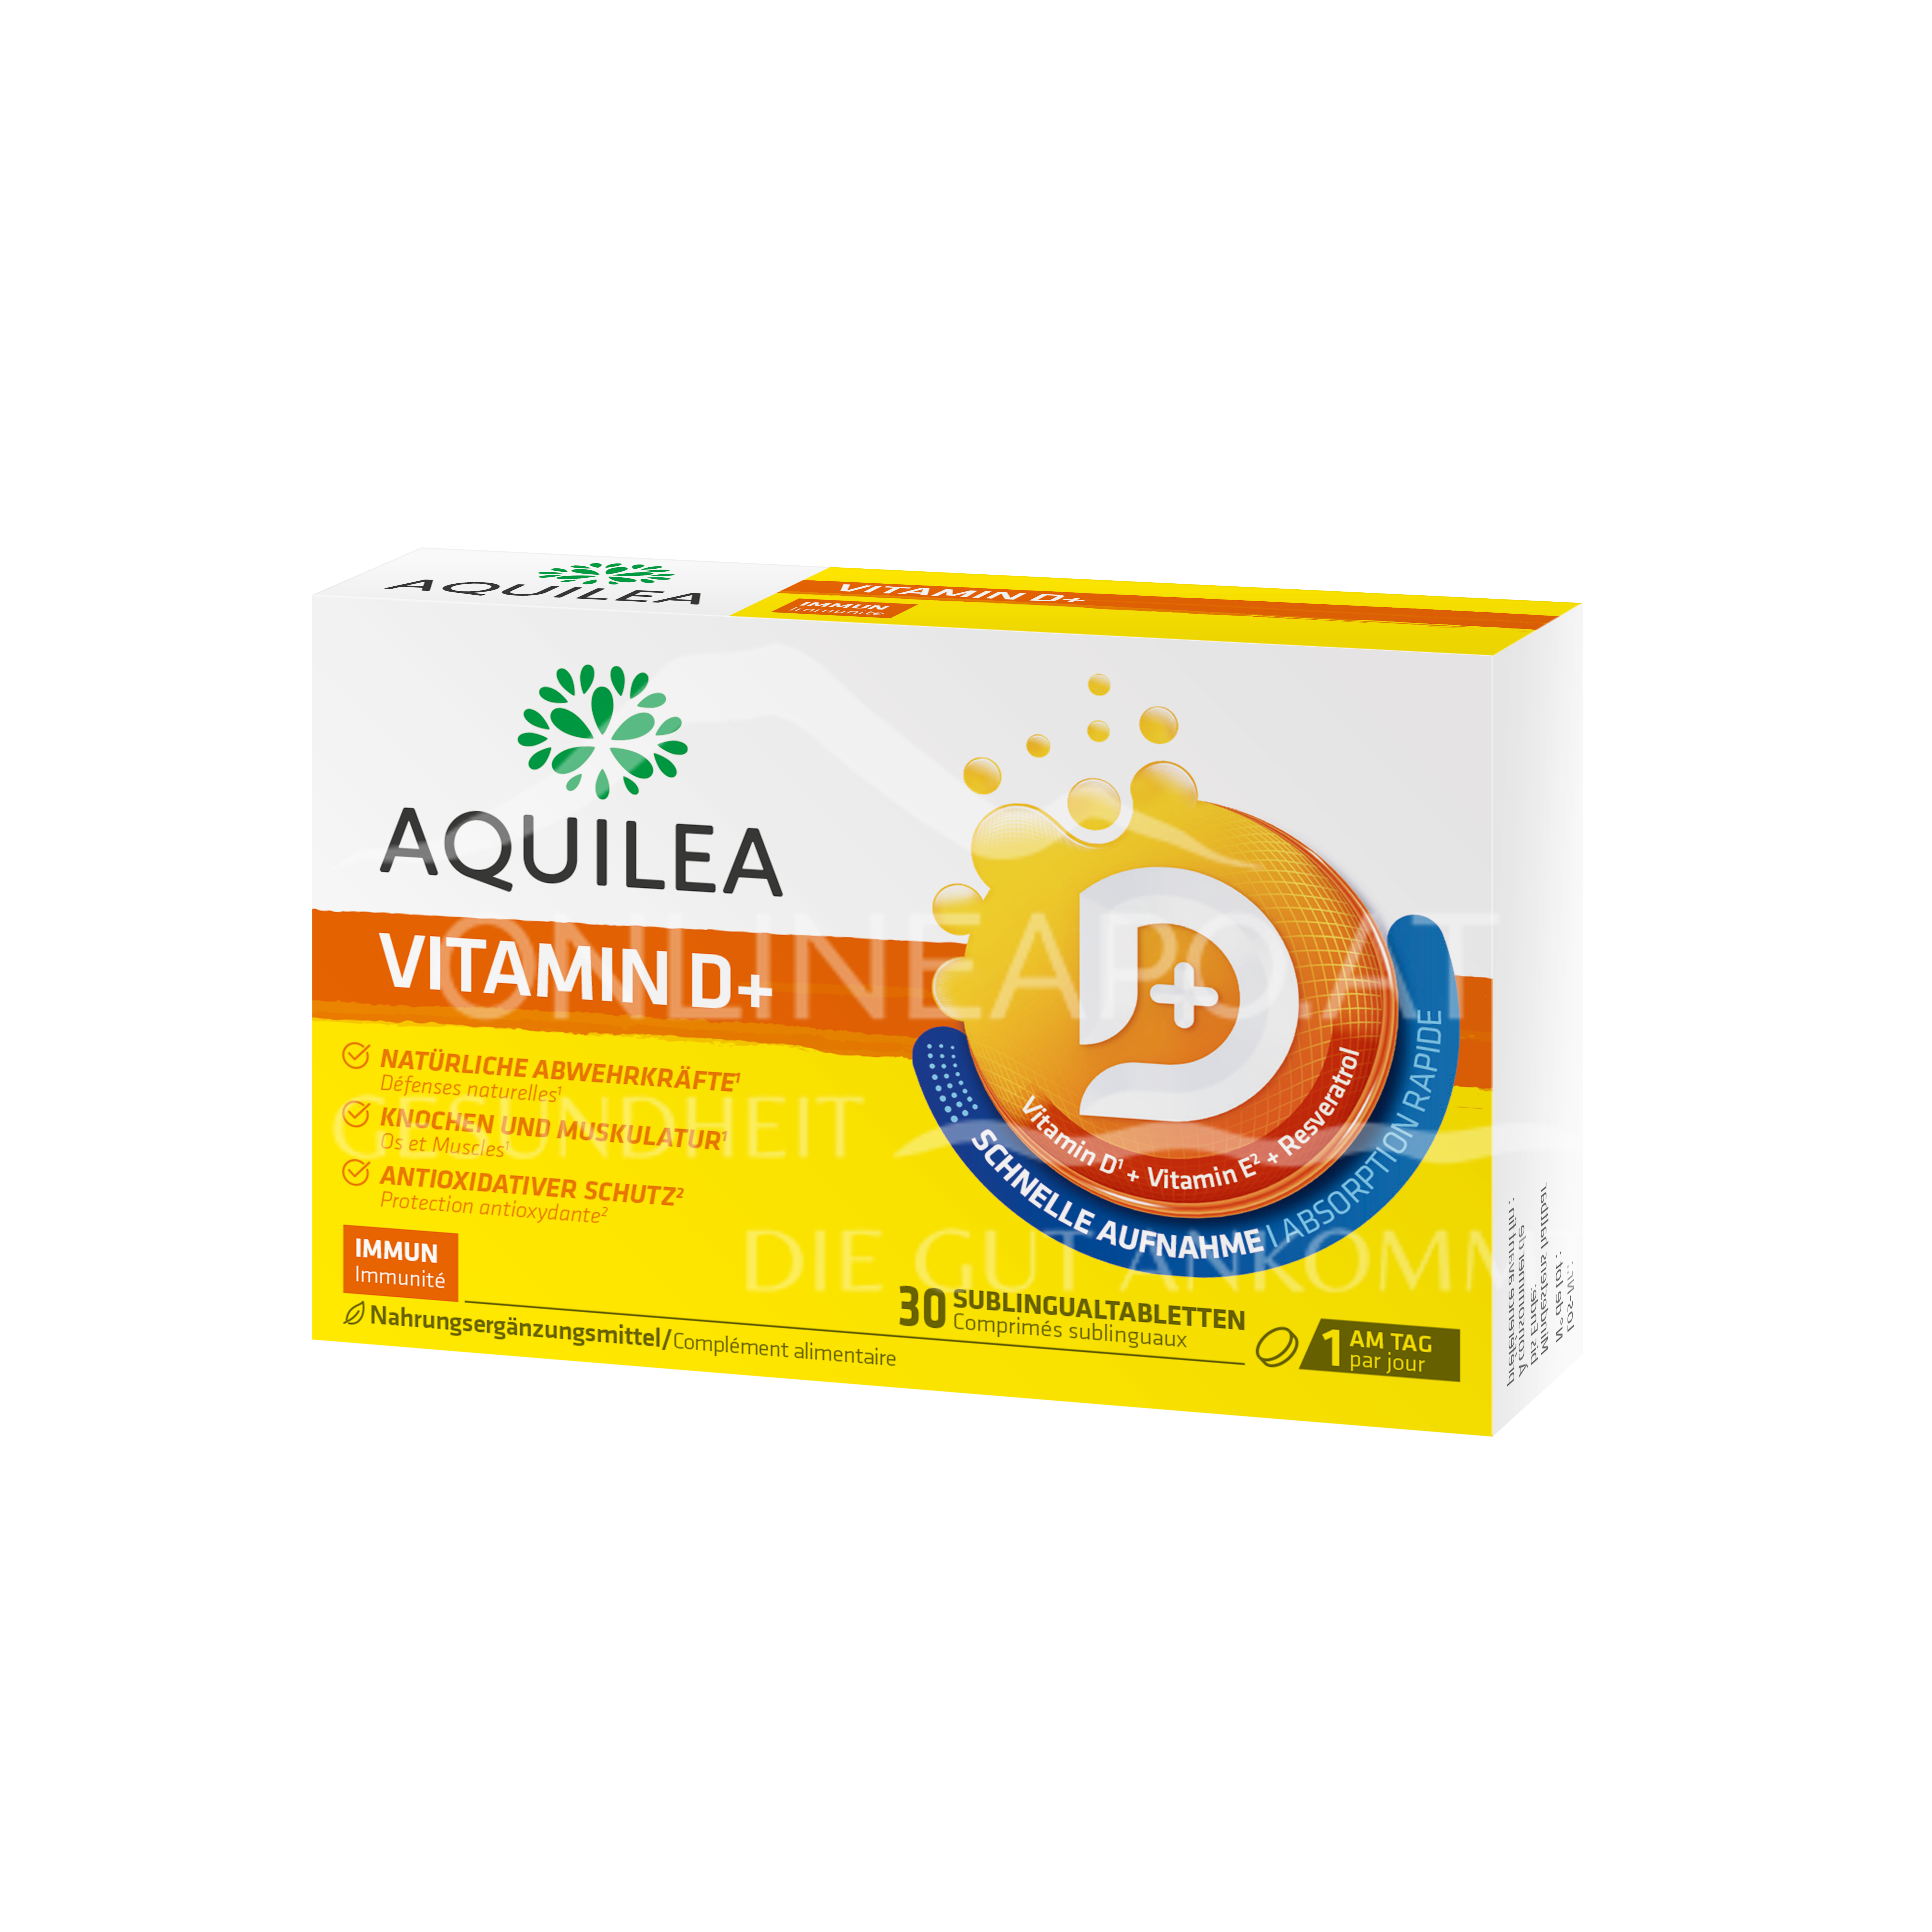 Aquilea Vitamin D+ Sublingualtabletten